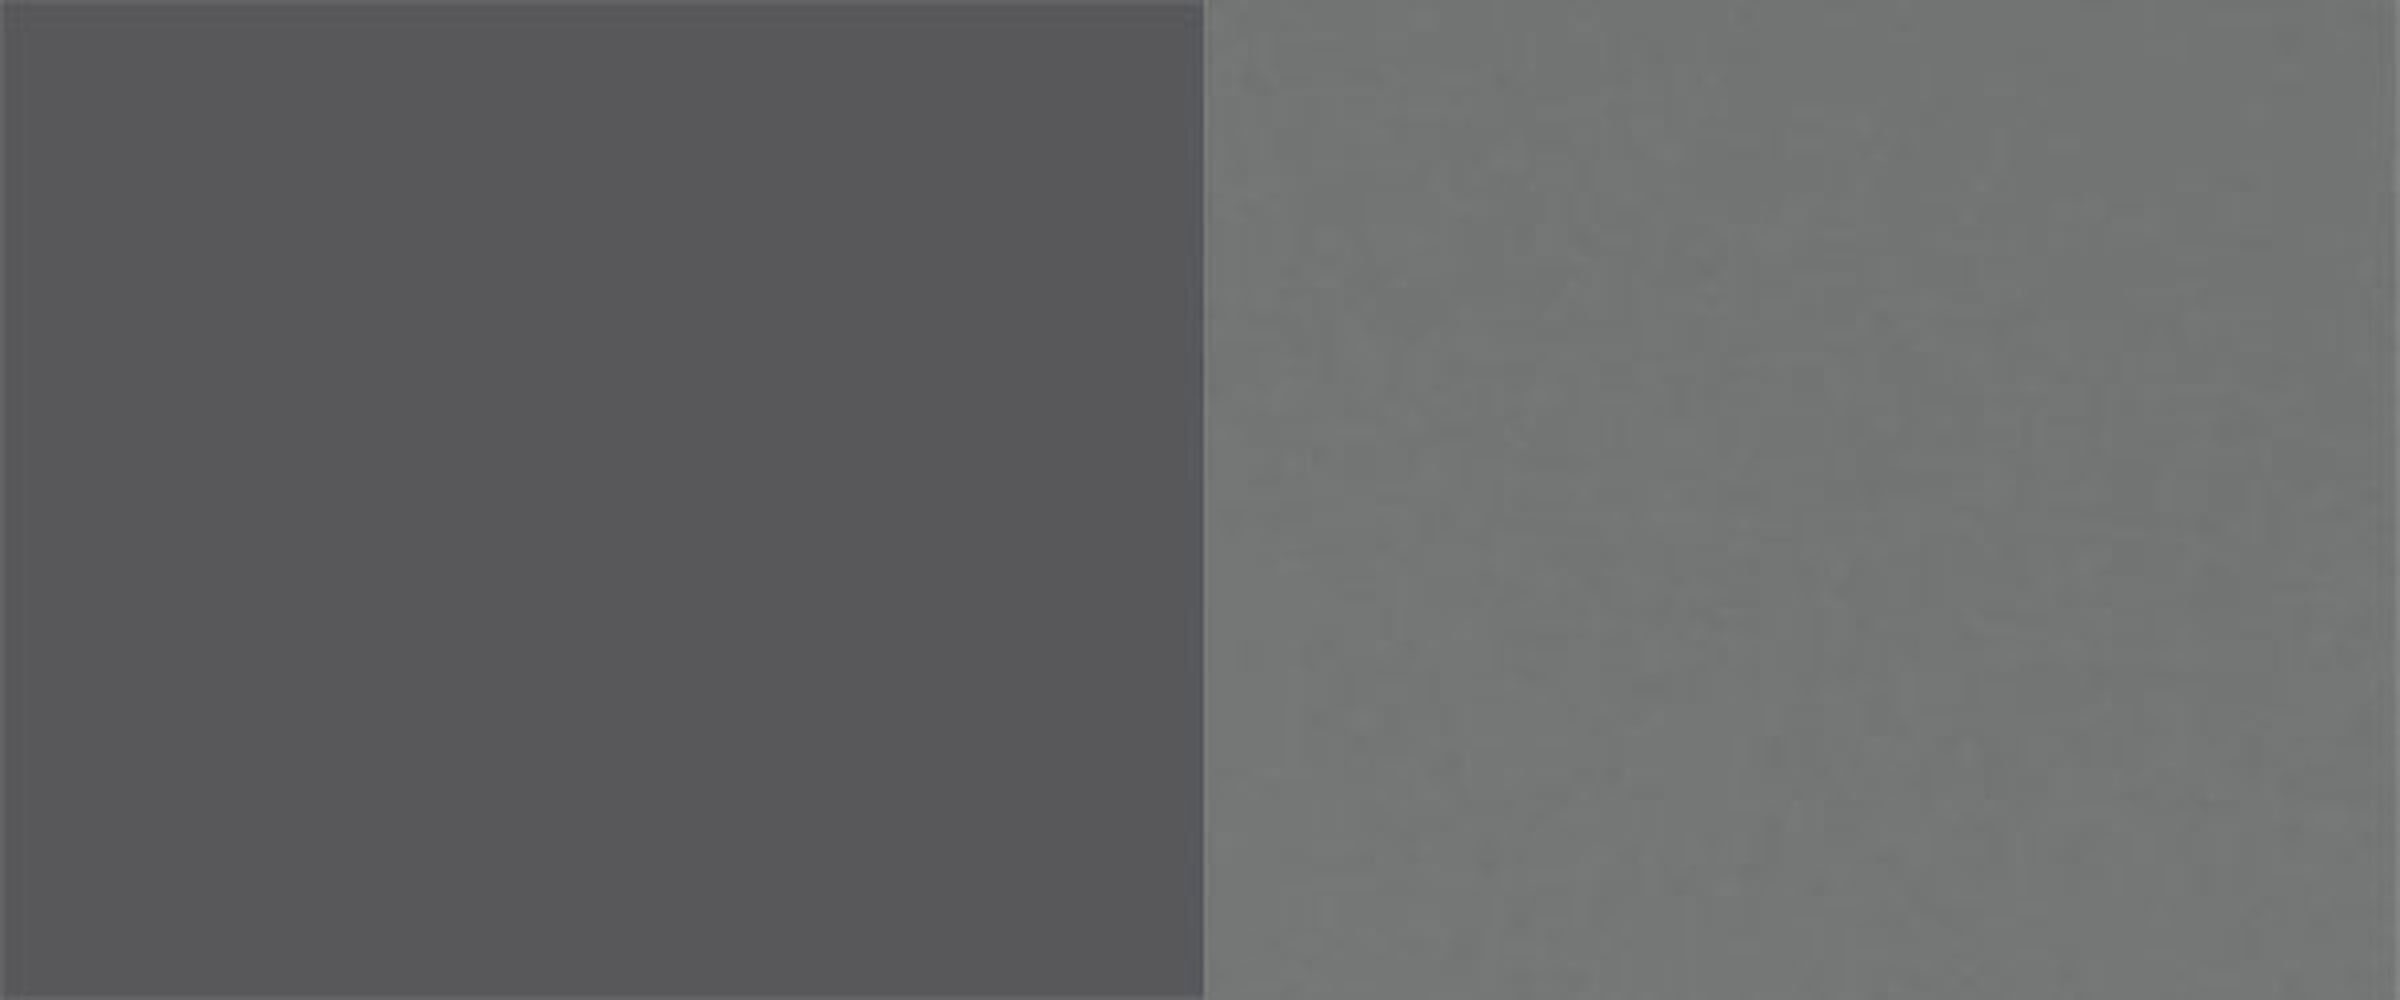 60x60cm Front- 1-türig wählbar Feldmann-Wohnen und Korpusfarbe dust (Bonn, Eckhängeschrank matt Eckhängeschrank) Bonn grey